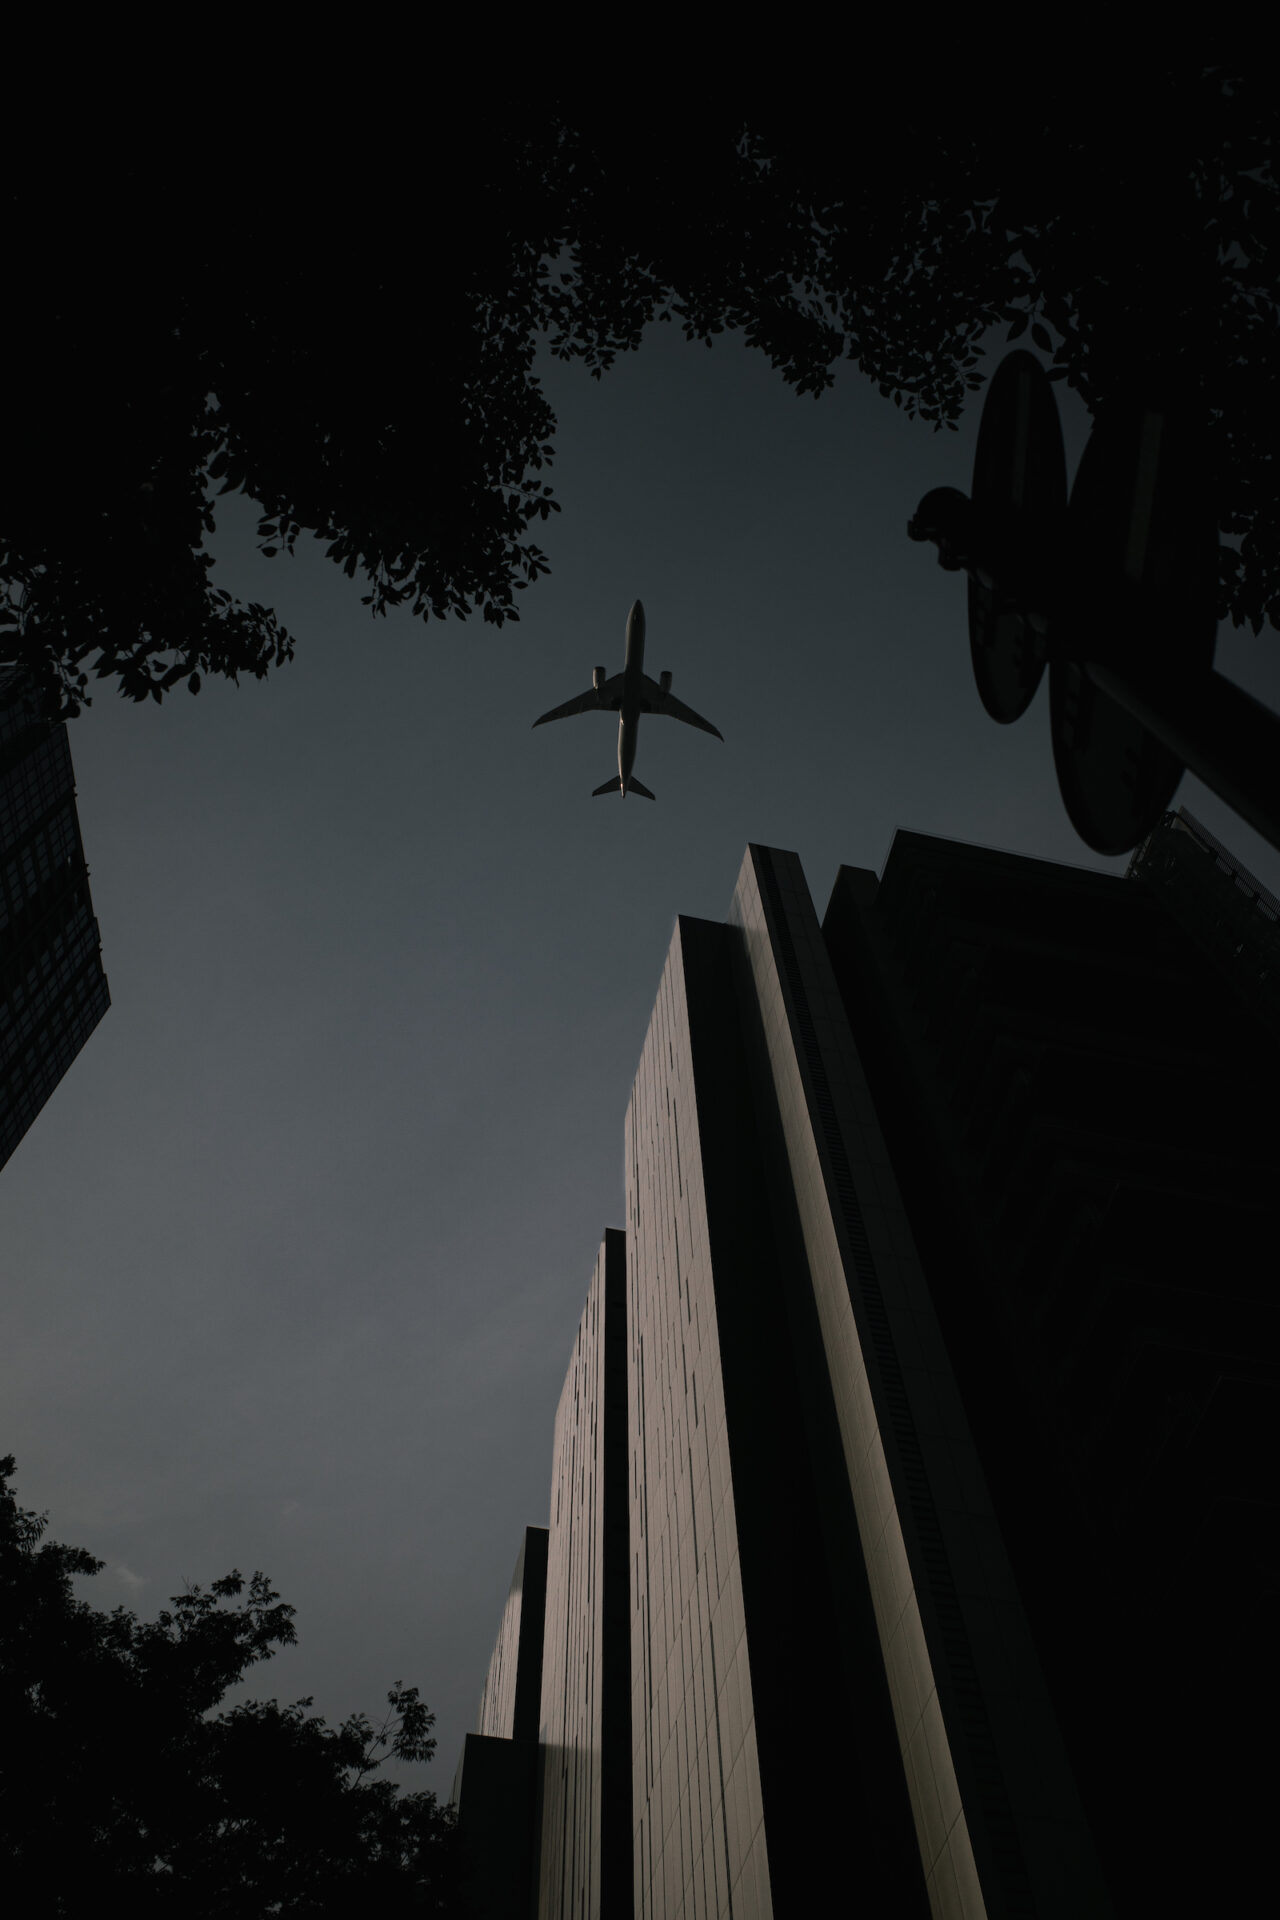 RICOH GR III Diary Editionで撮影したビル群の空を飛ぶ飛行機